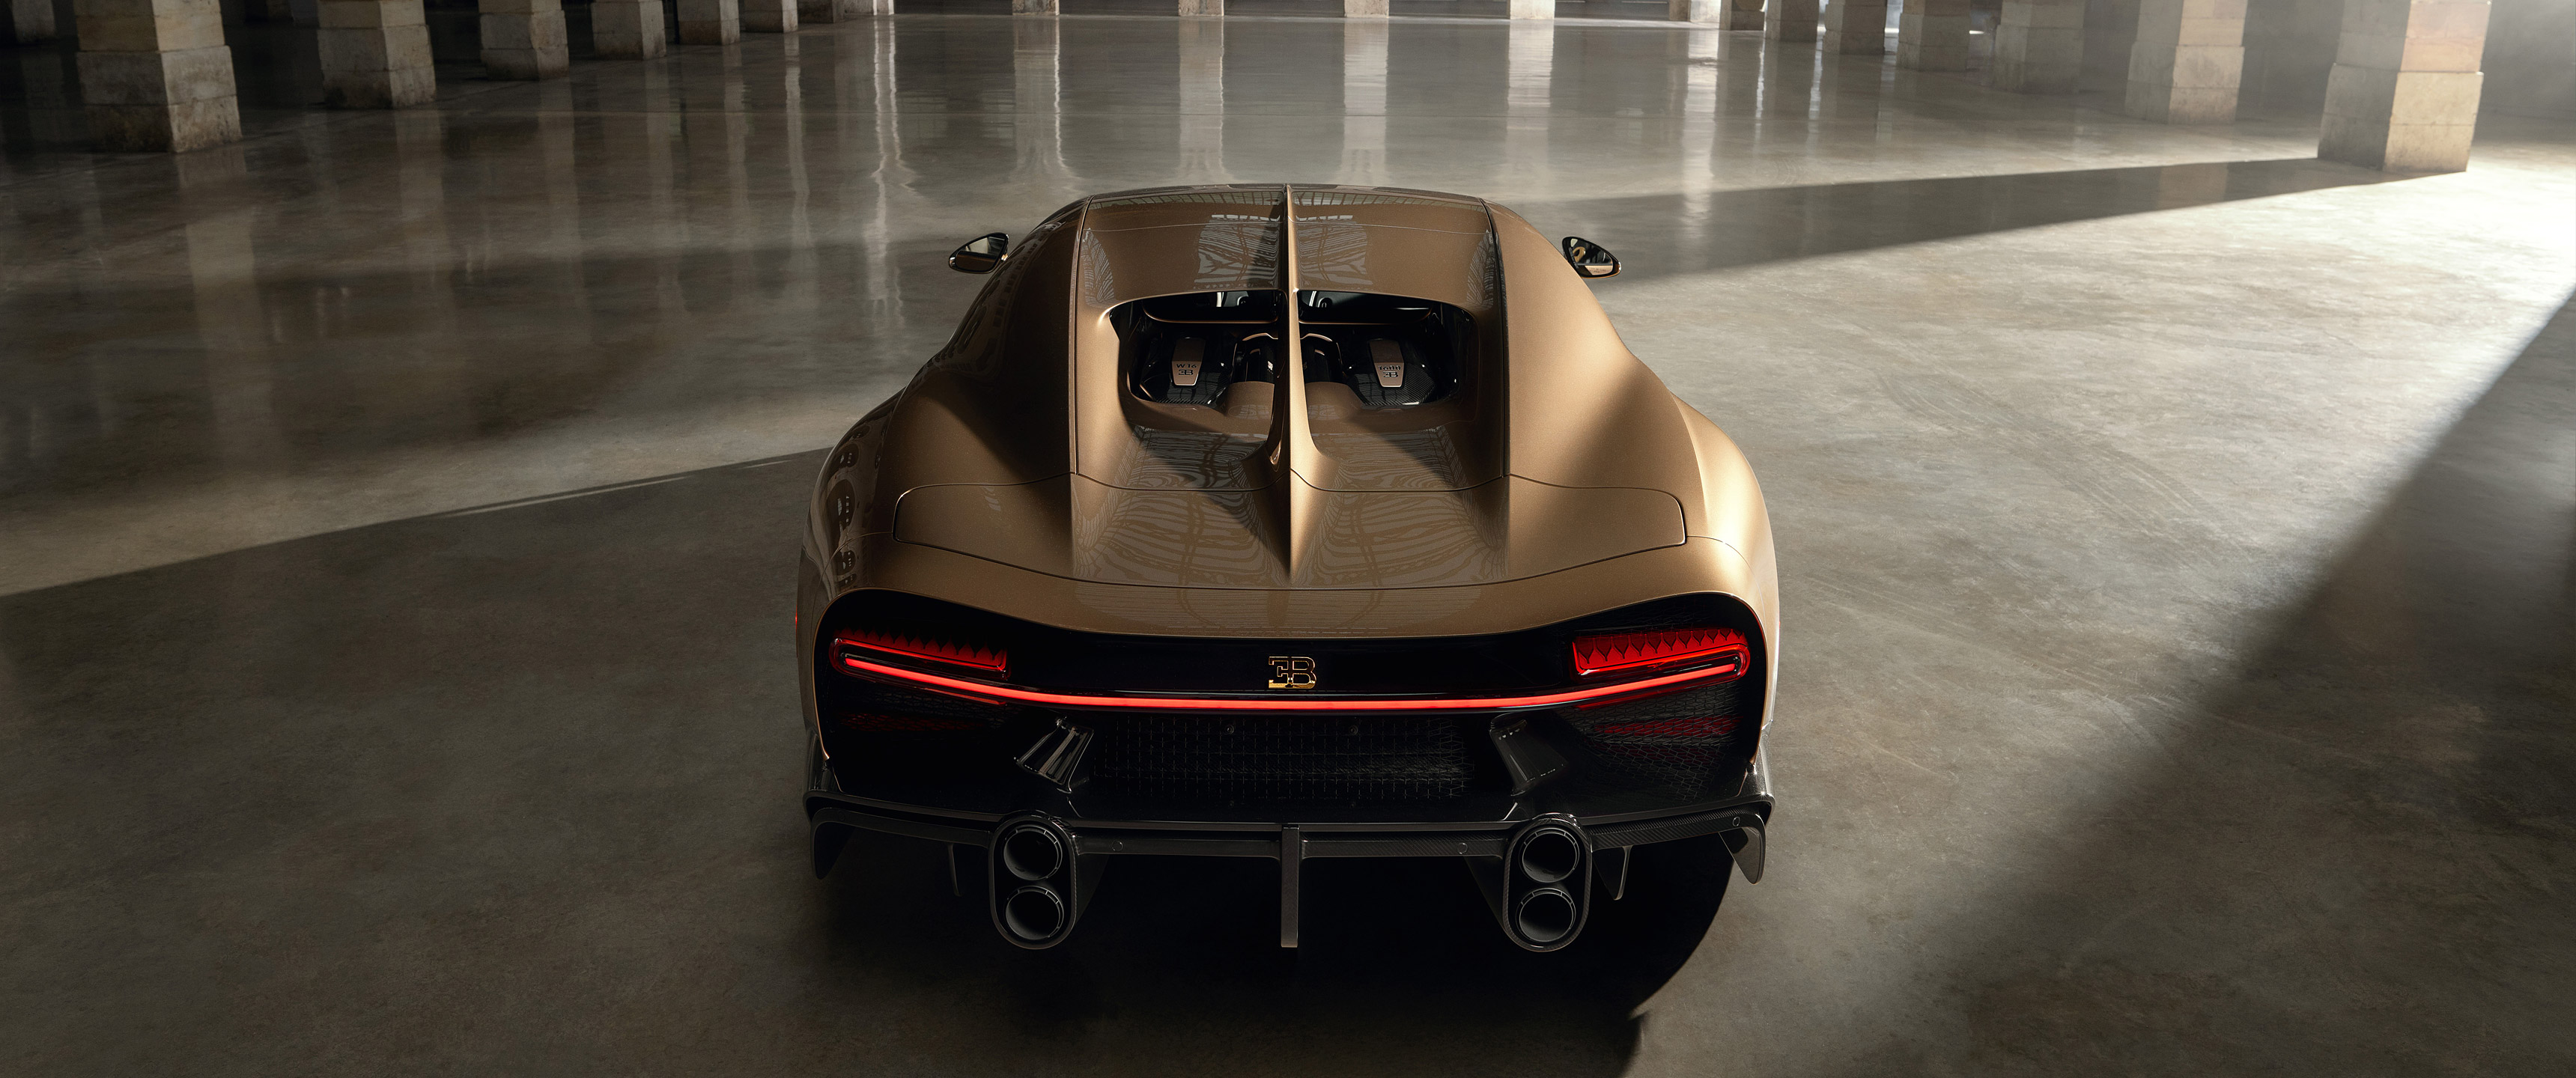  2023 Bugatti Chiron Super Sport Golden Era Wallpaper.